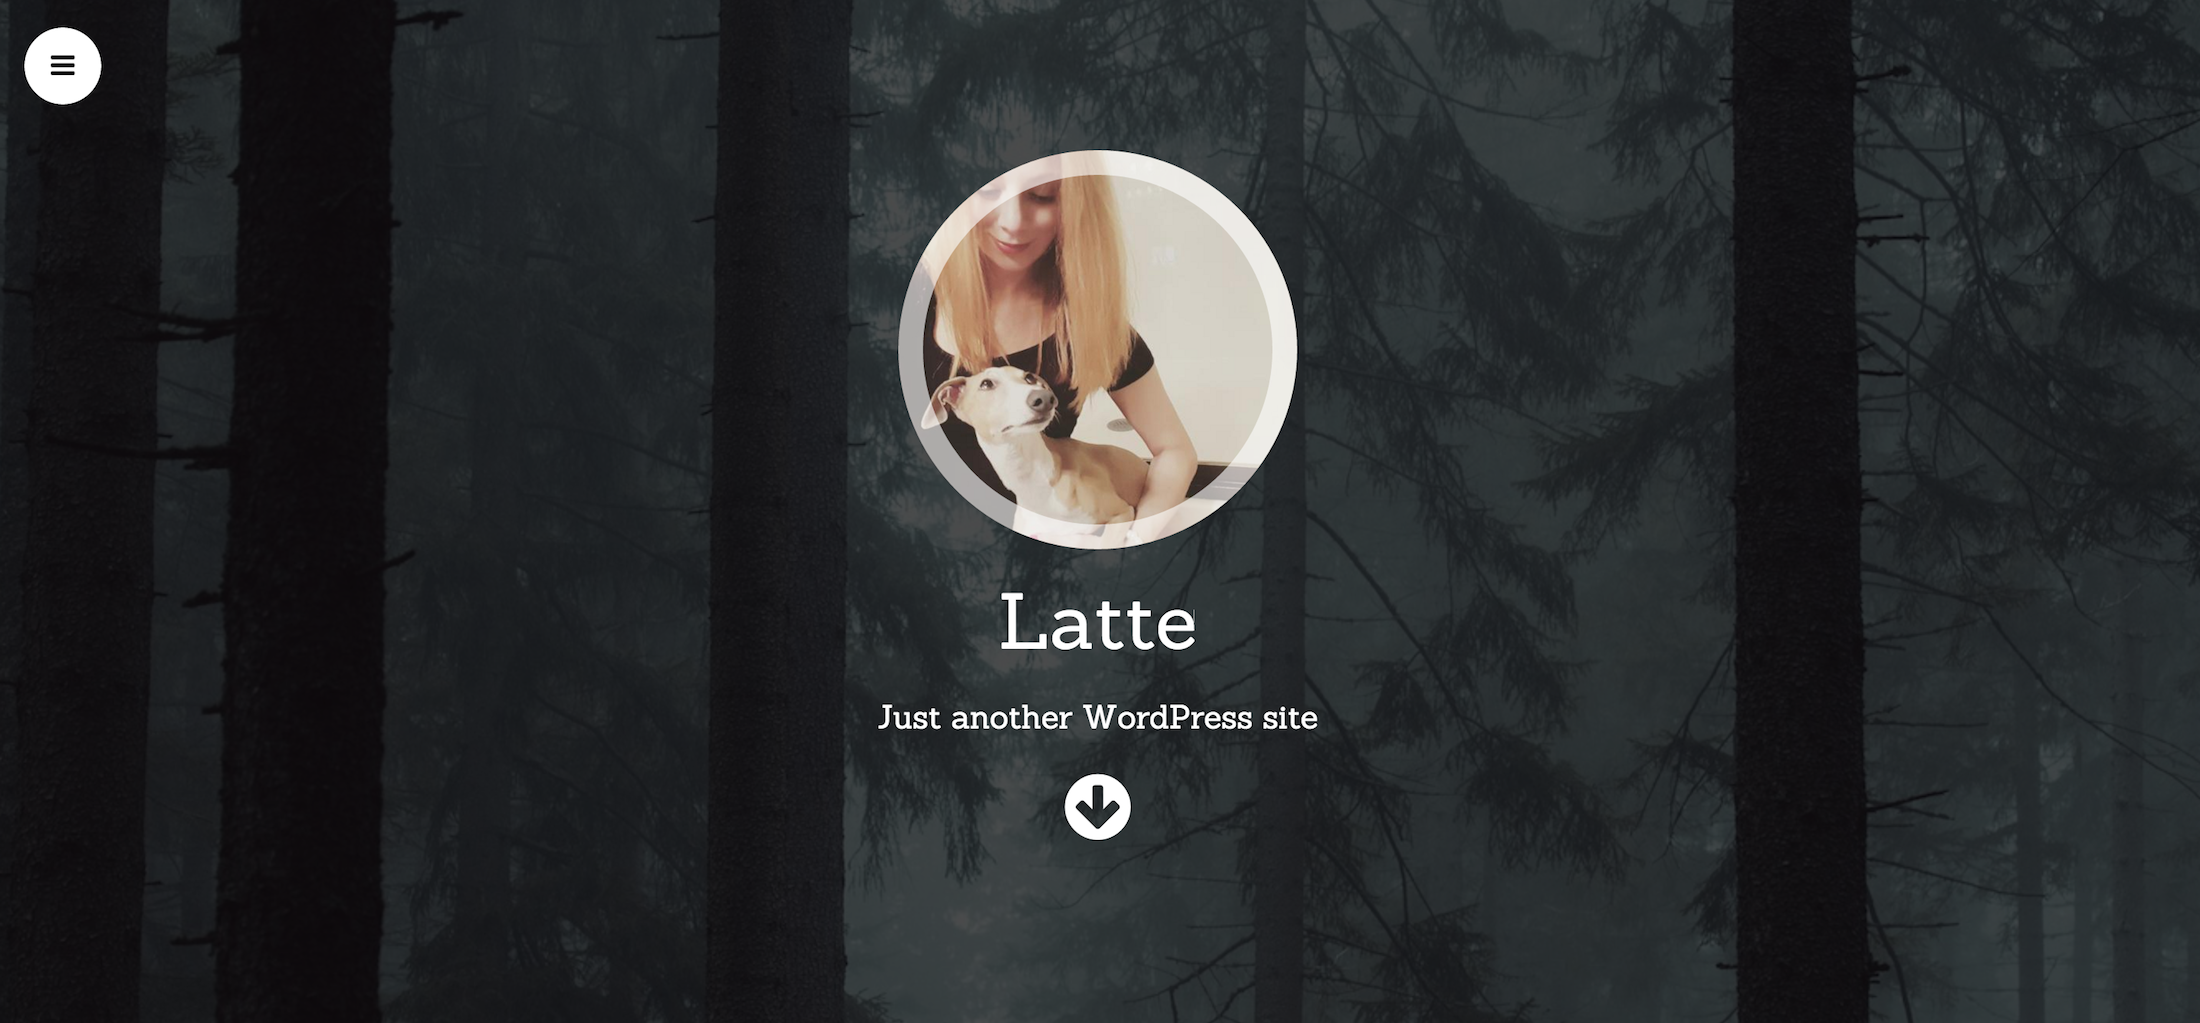 Latte: A Free One-Page WordPress Theme to Showcase Your Profile